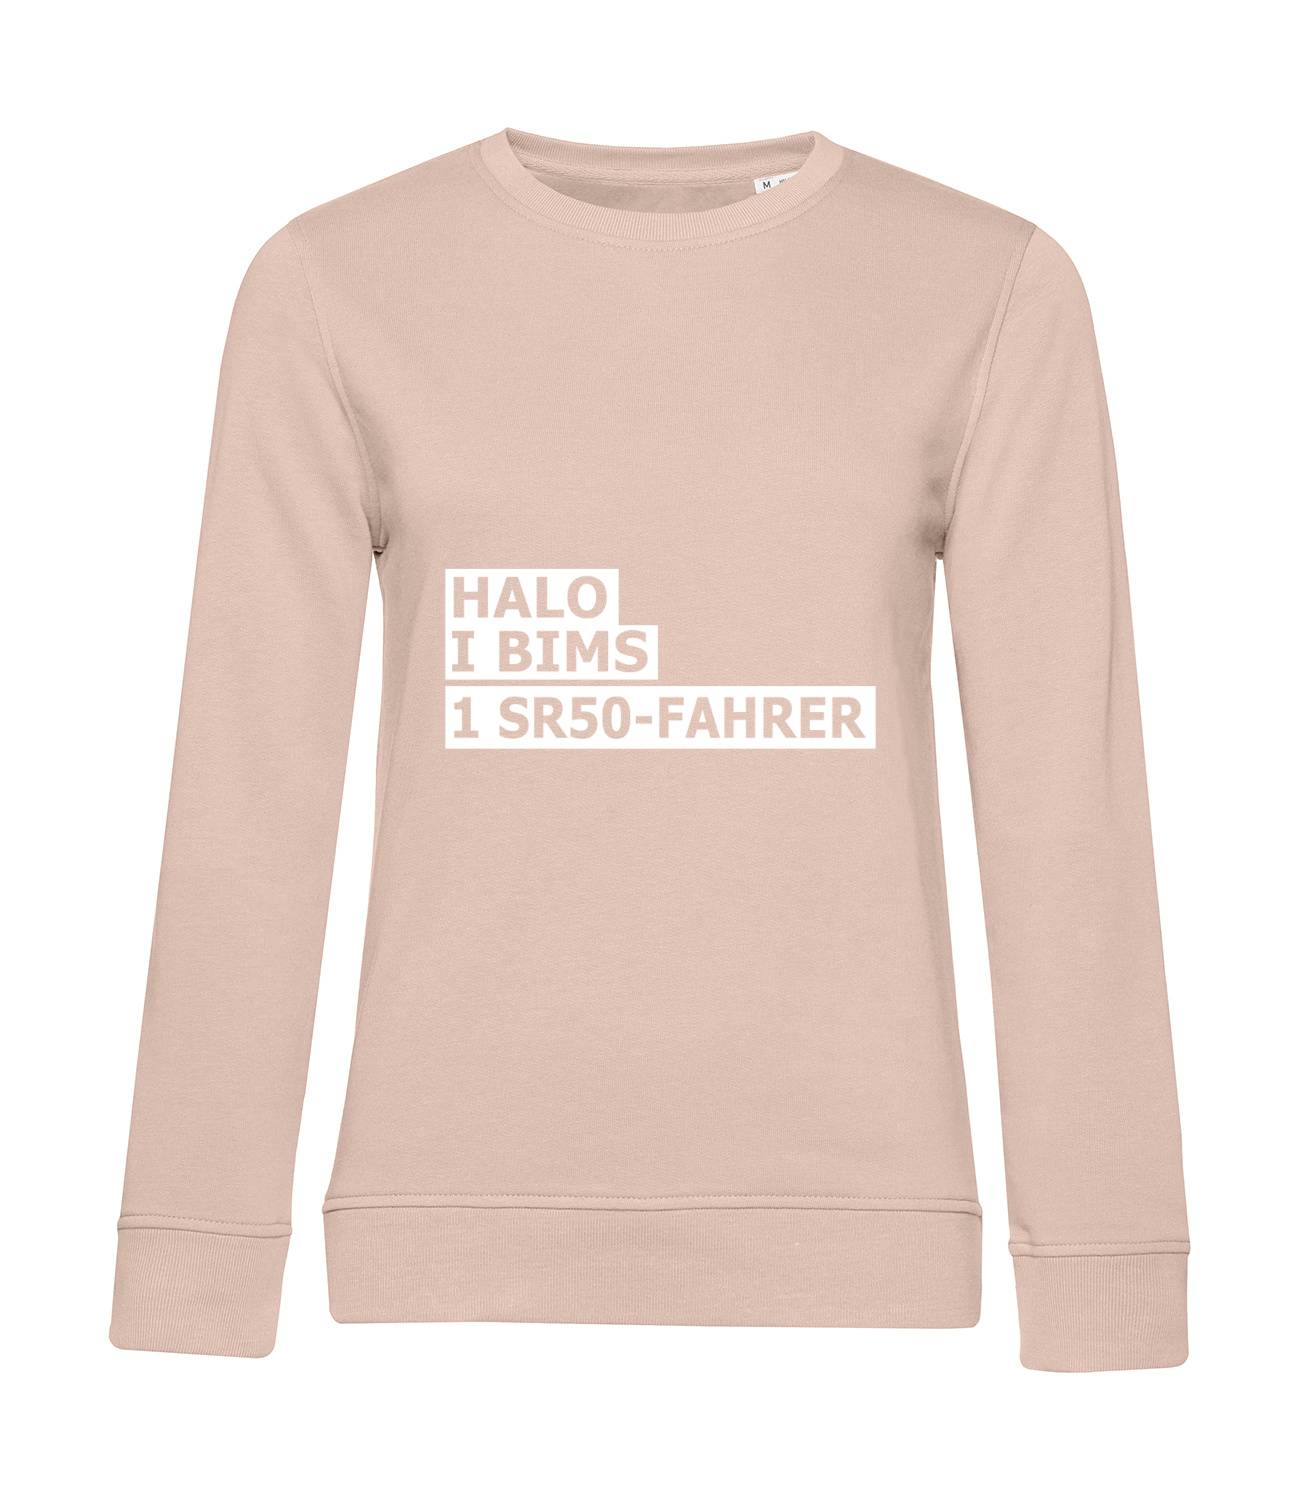 Nachhaltiges Sweatshirt Damen 2Takter - Halo I bims 1 SR50-Fahrer